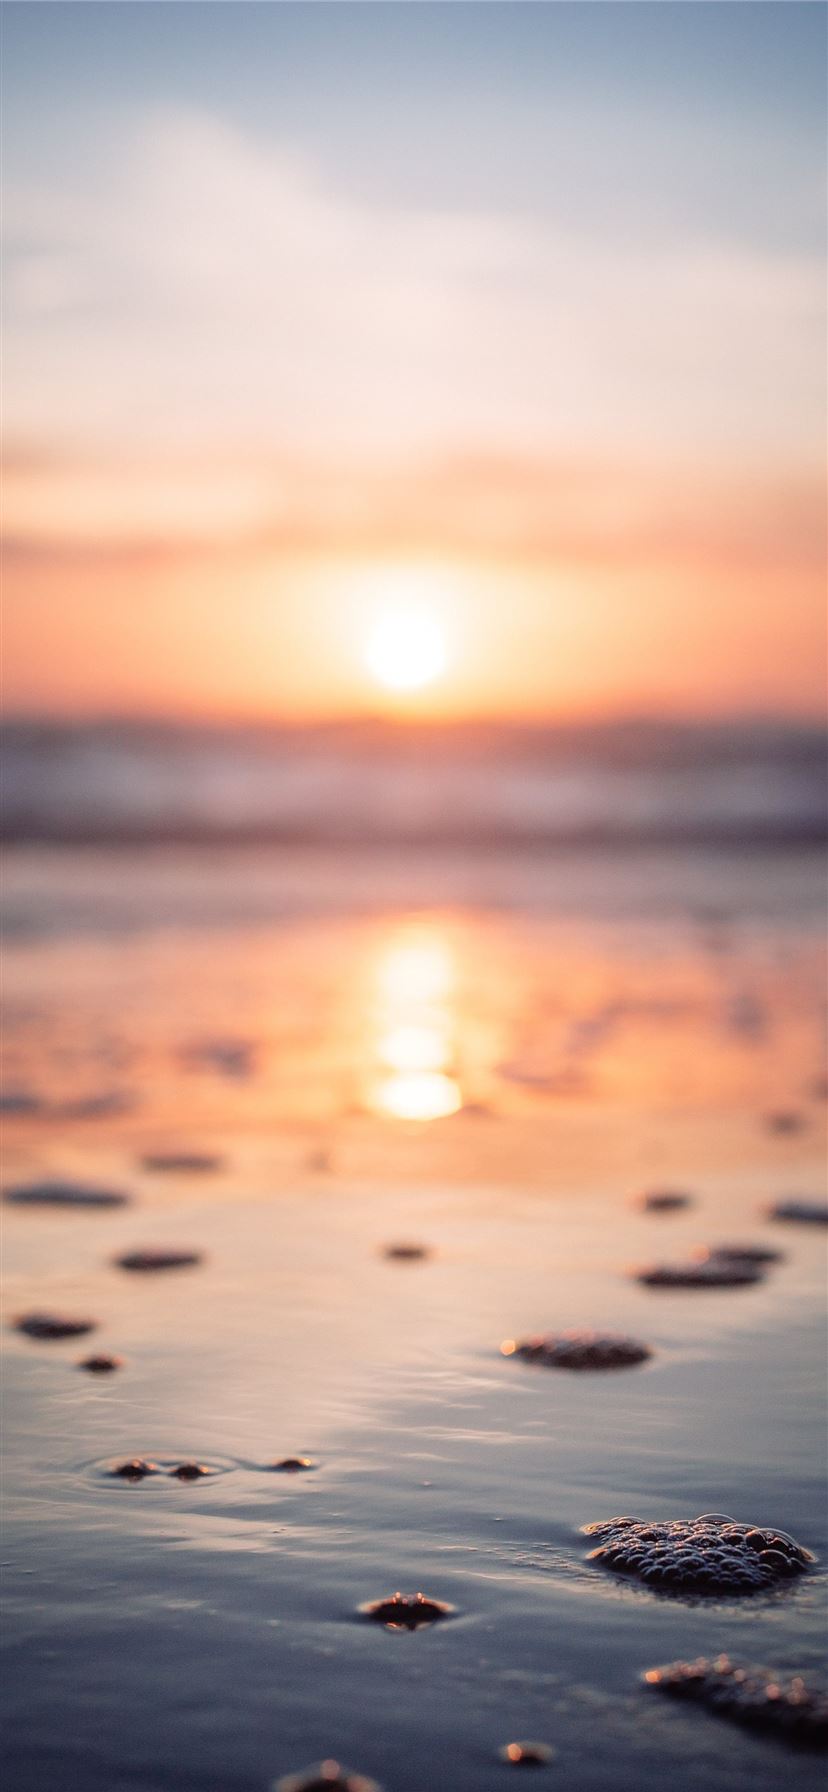 reflection of sunset on beachshore iPhone 11 wallpaper 